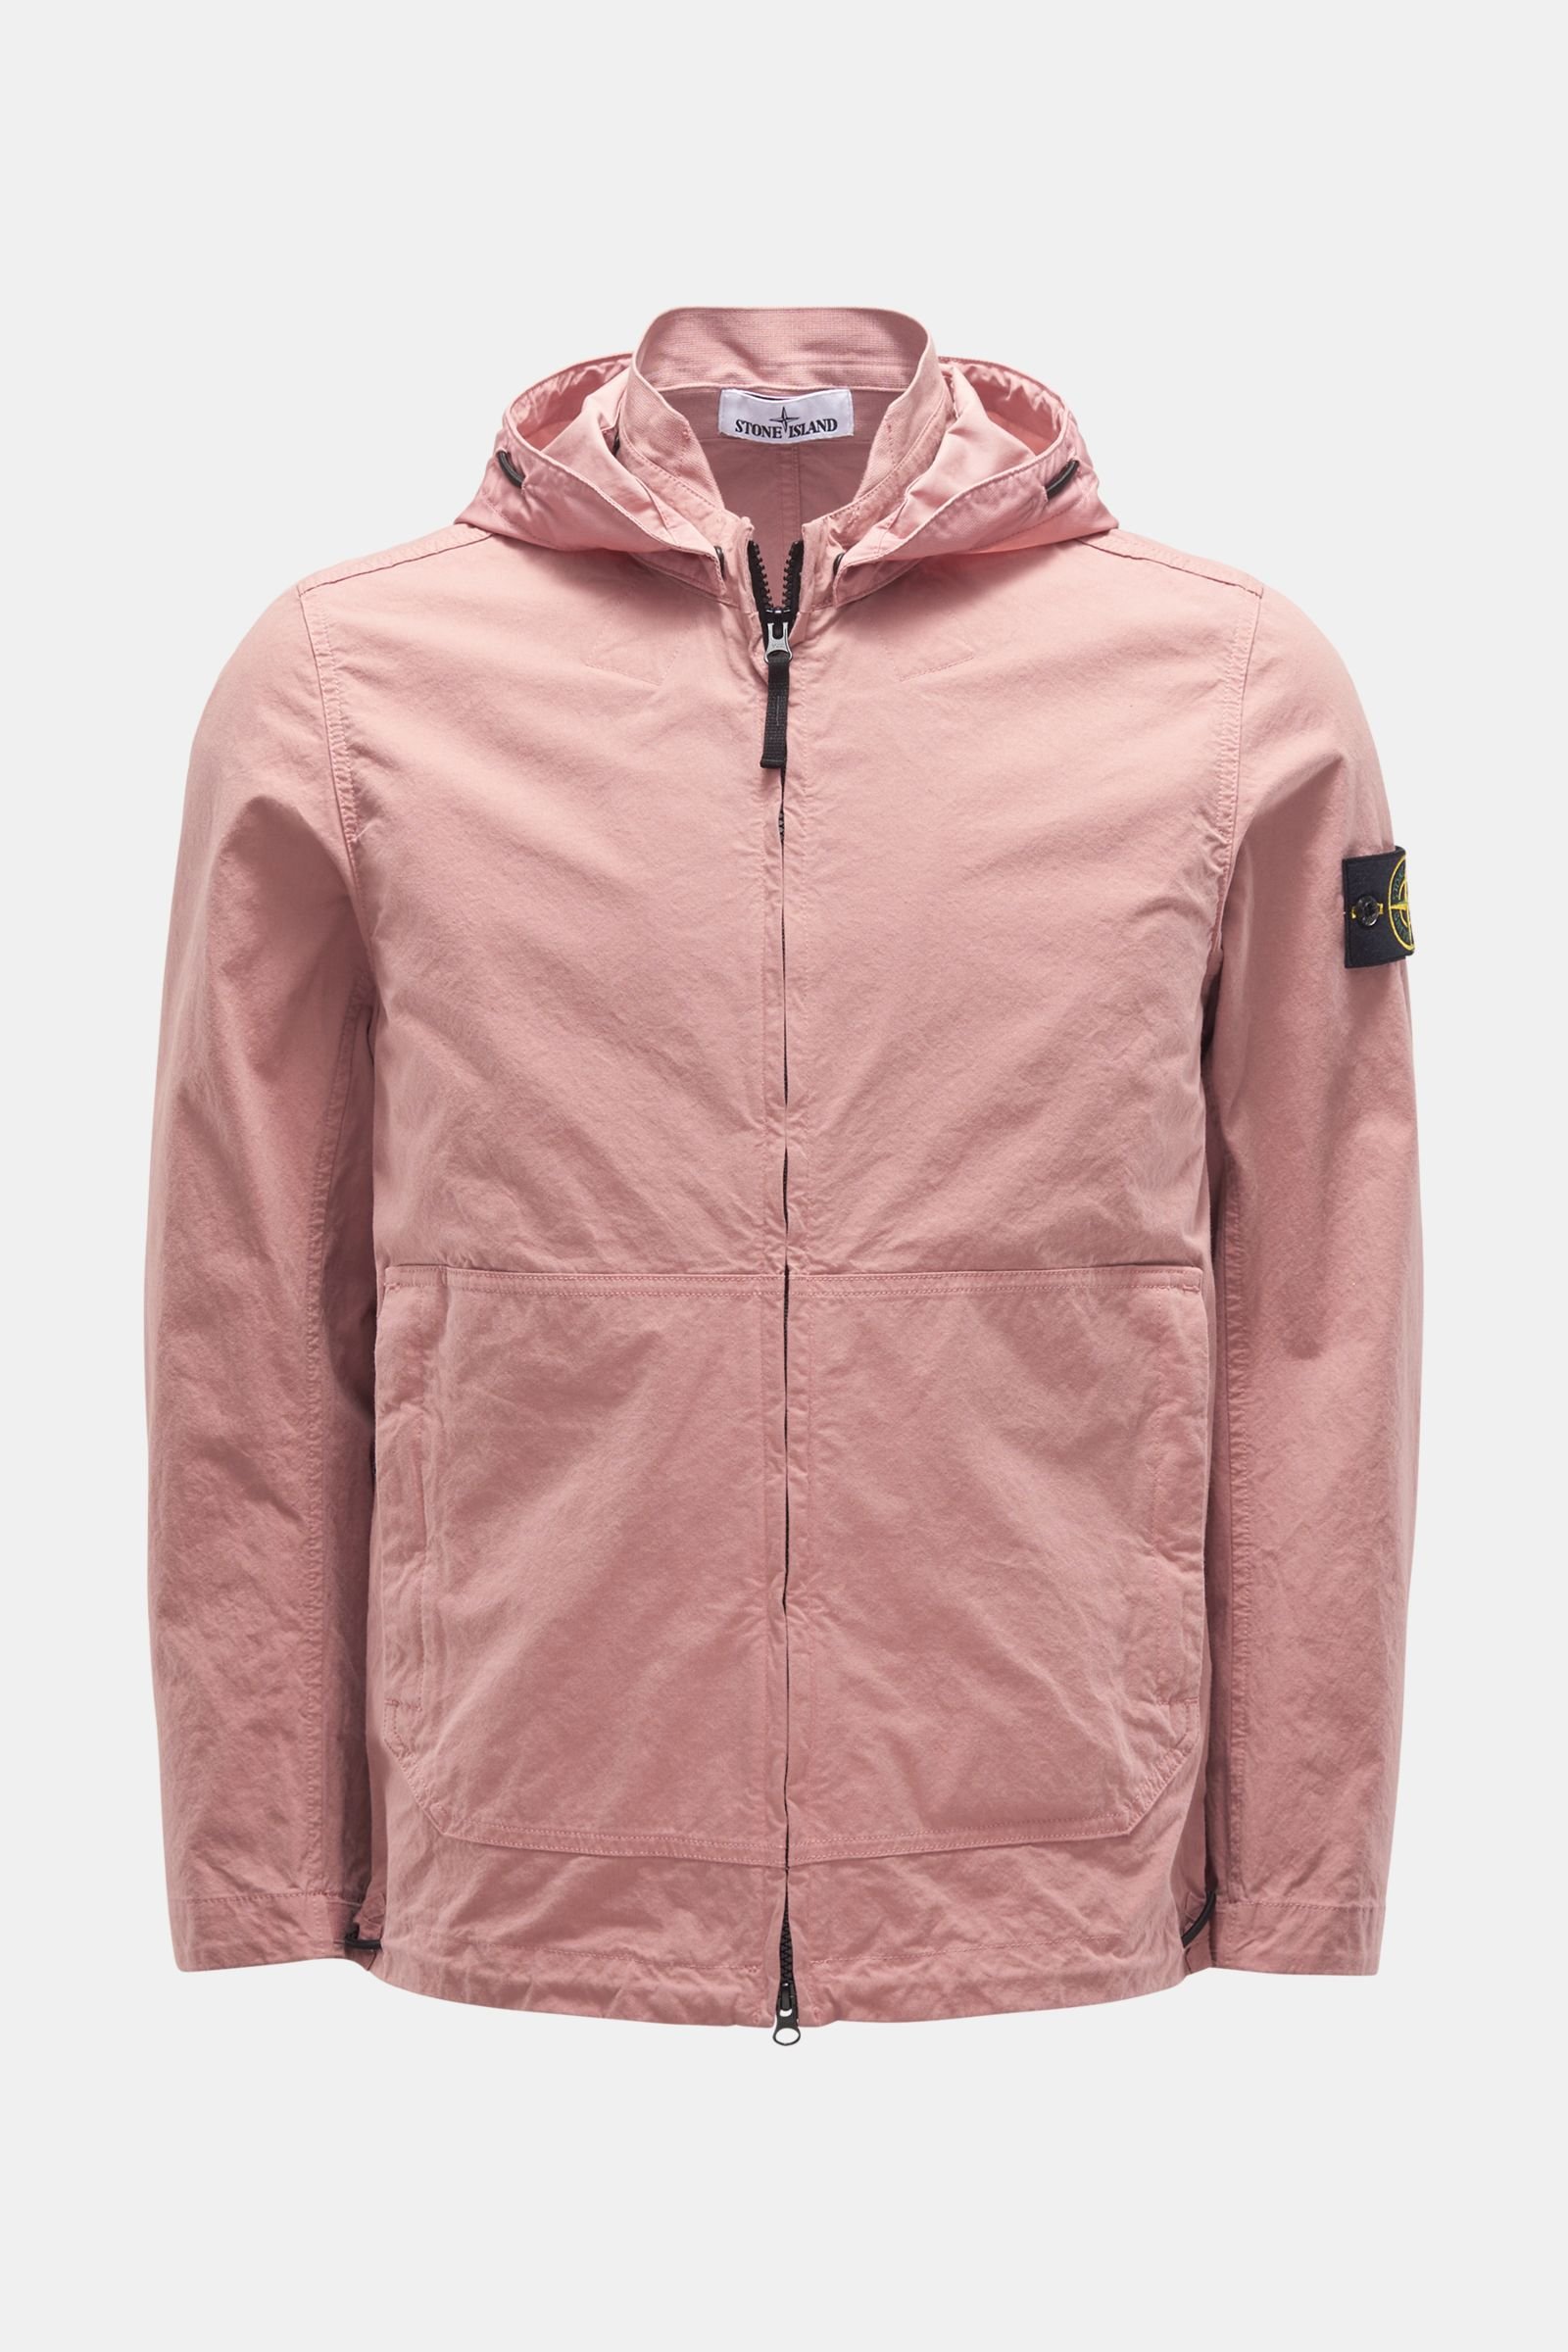 STONE ISLAND jacket 'Cotton/Cordura' antique pink | BRAUN Hamburg